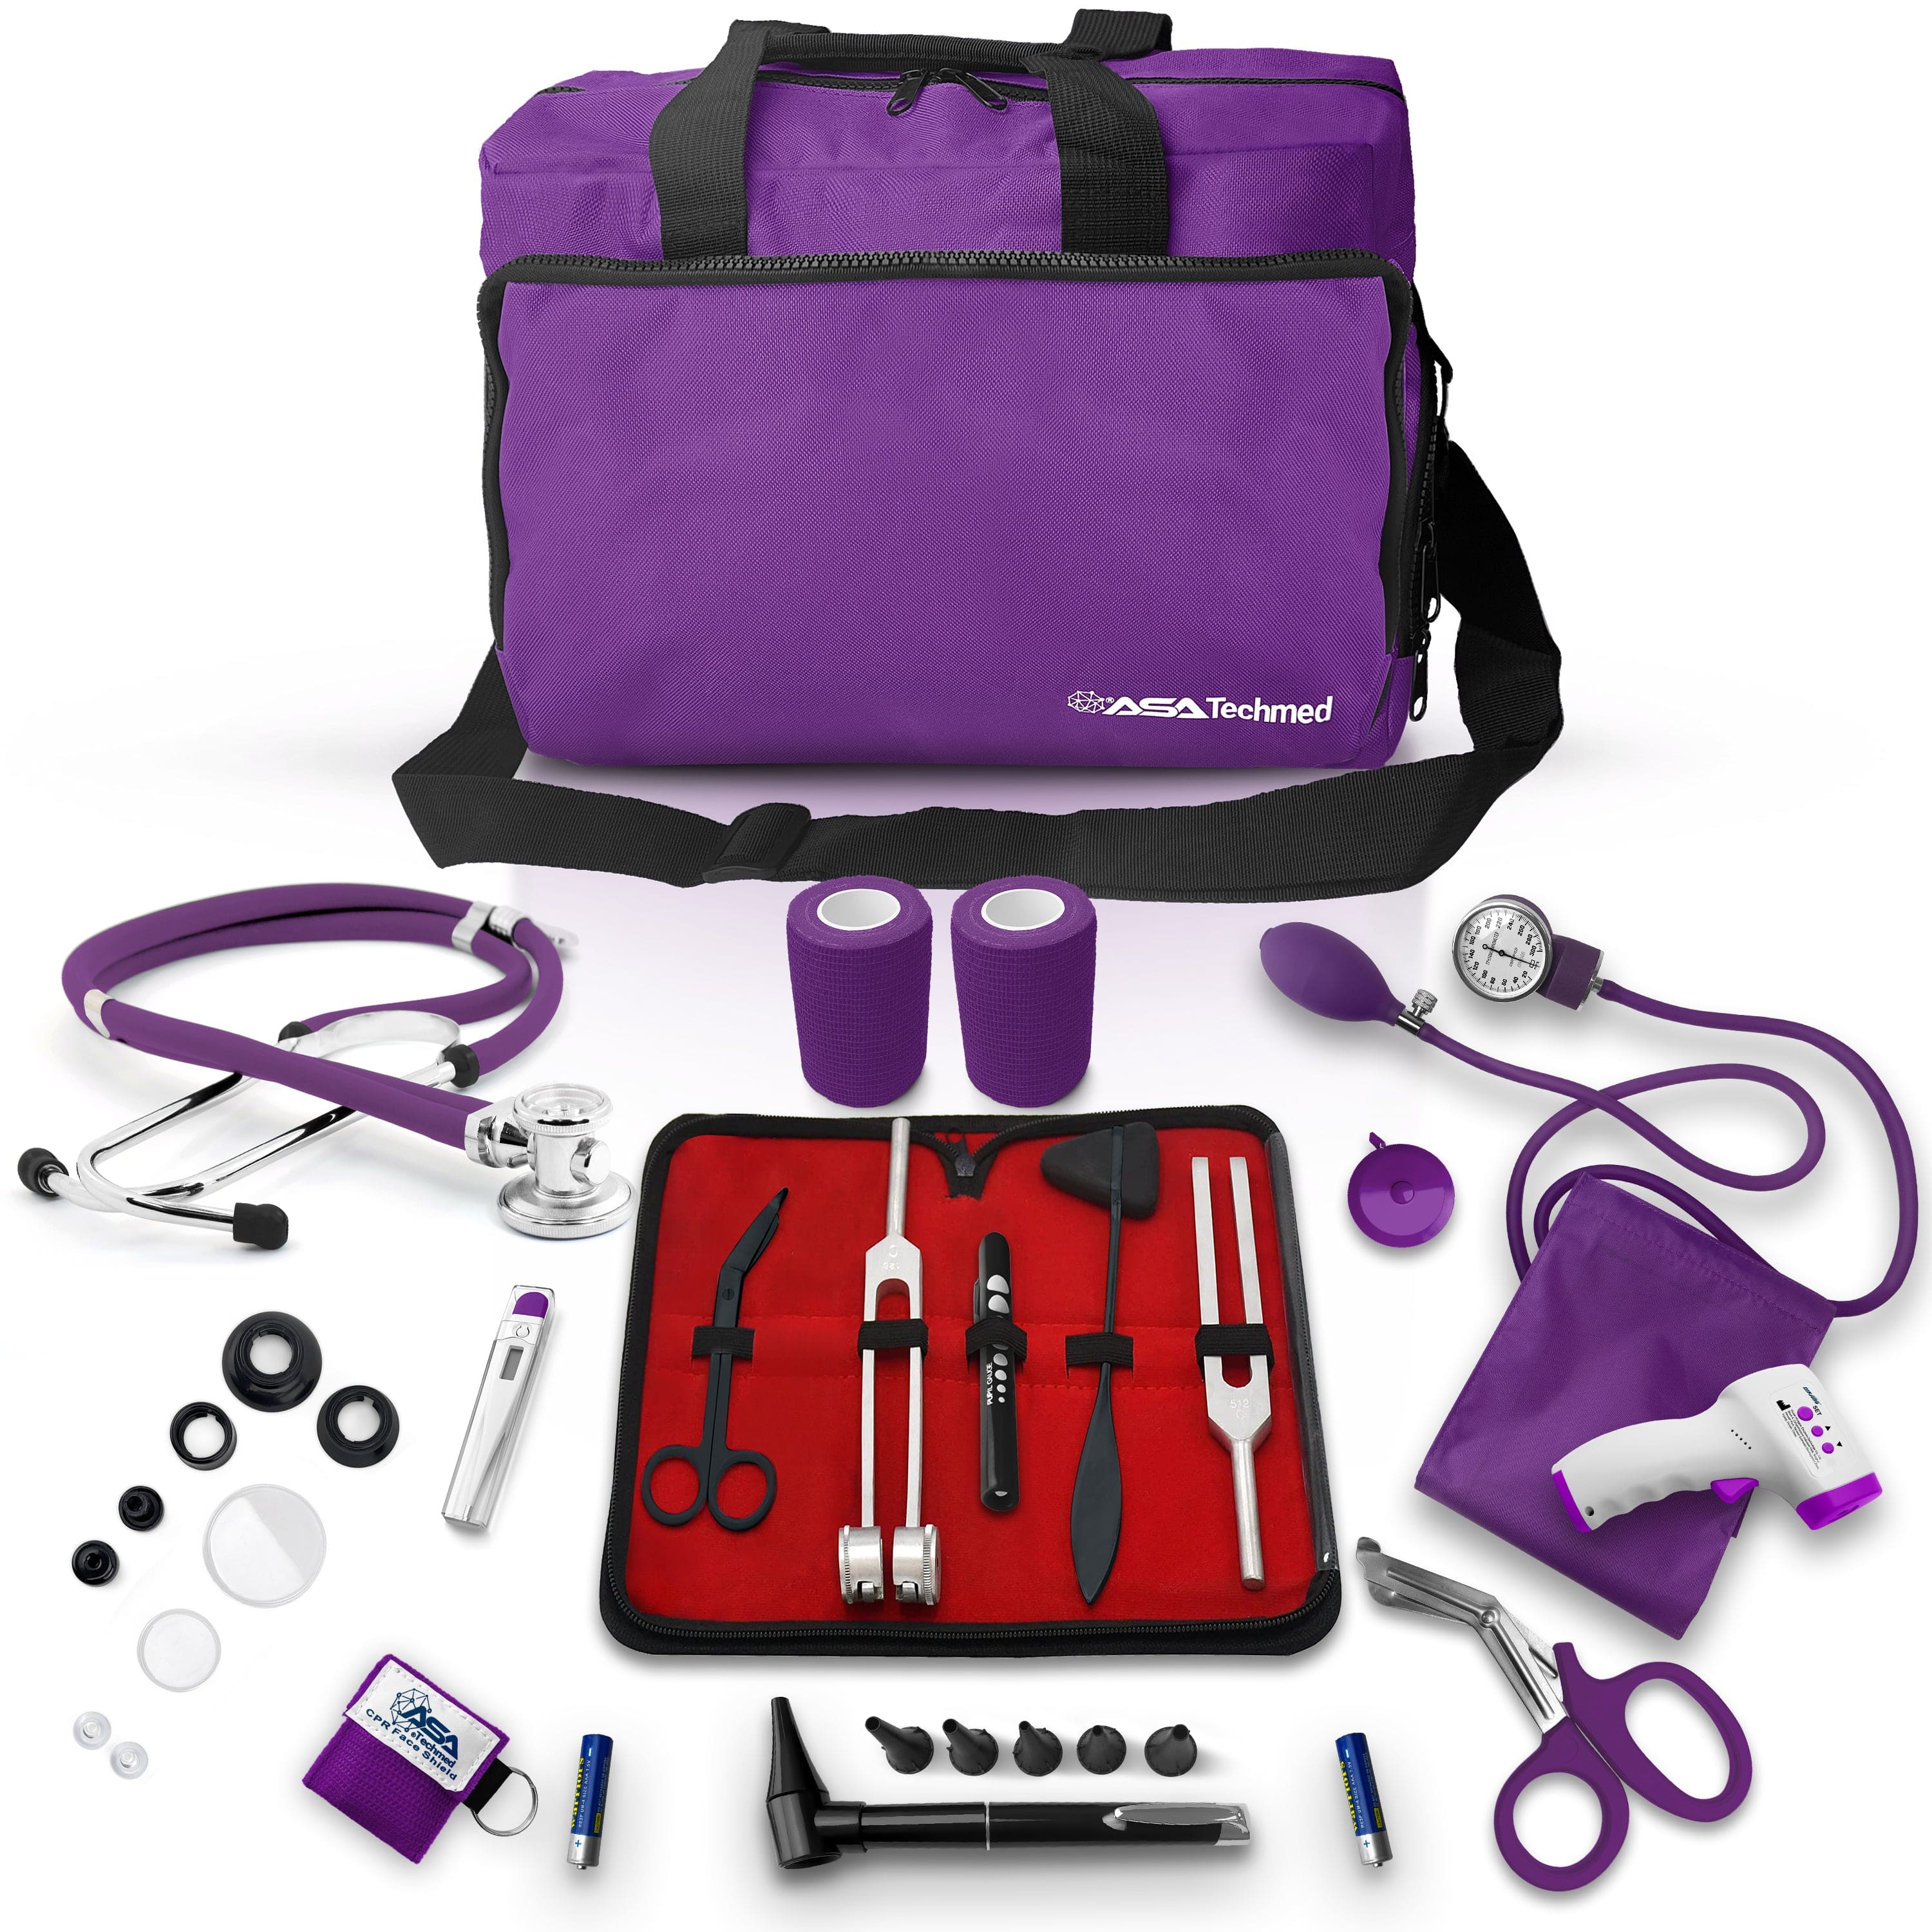 18 Piece Nursing Essentials Kit, Your Complete Medical Toolset